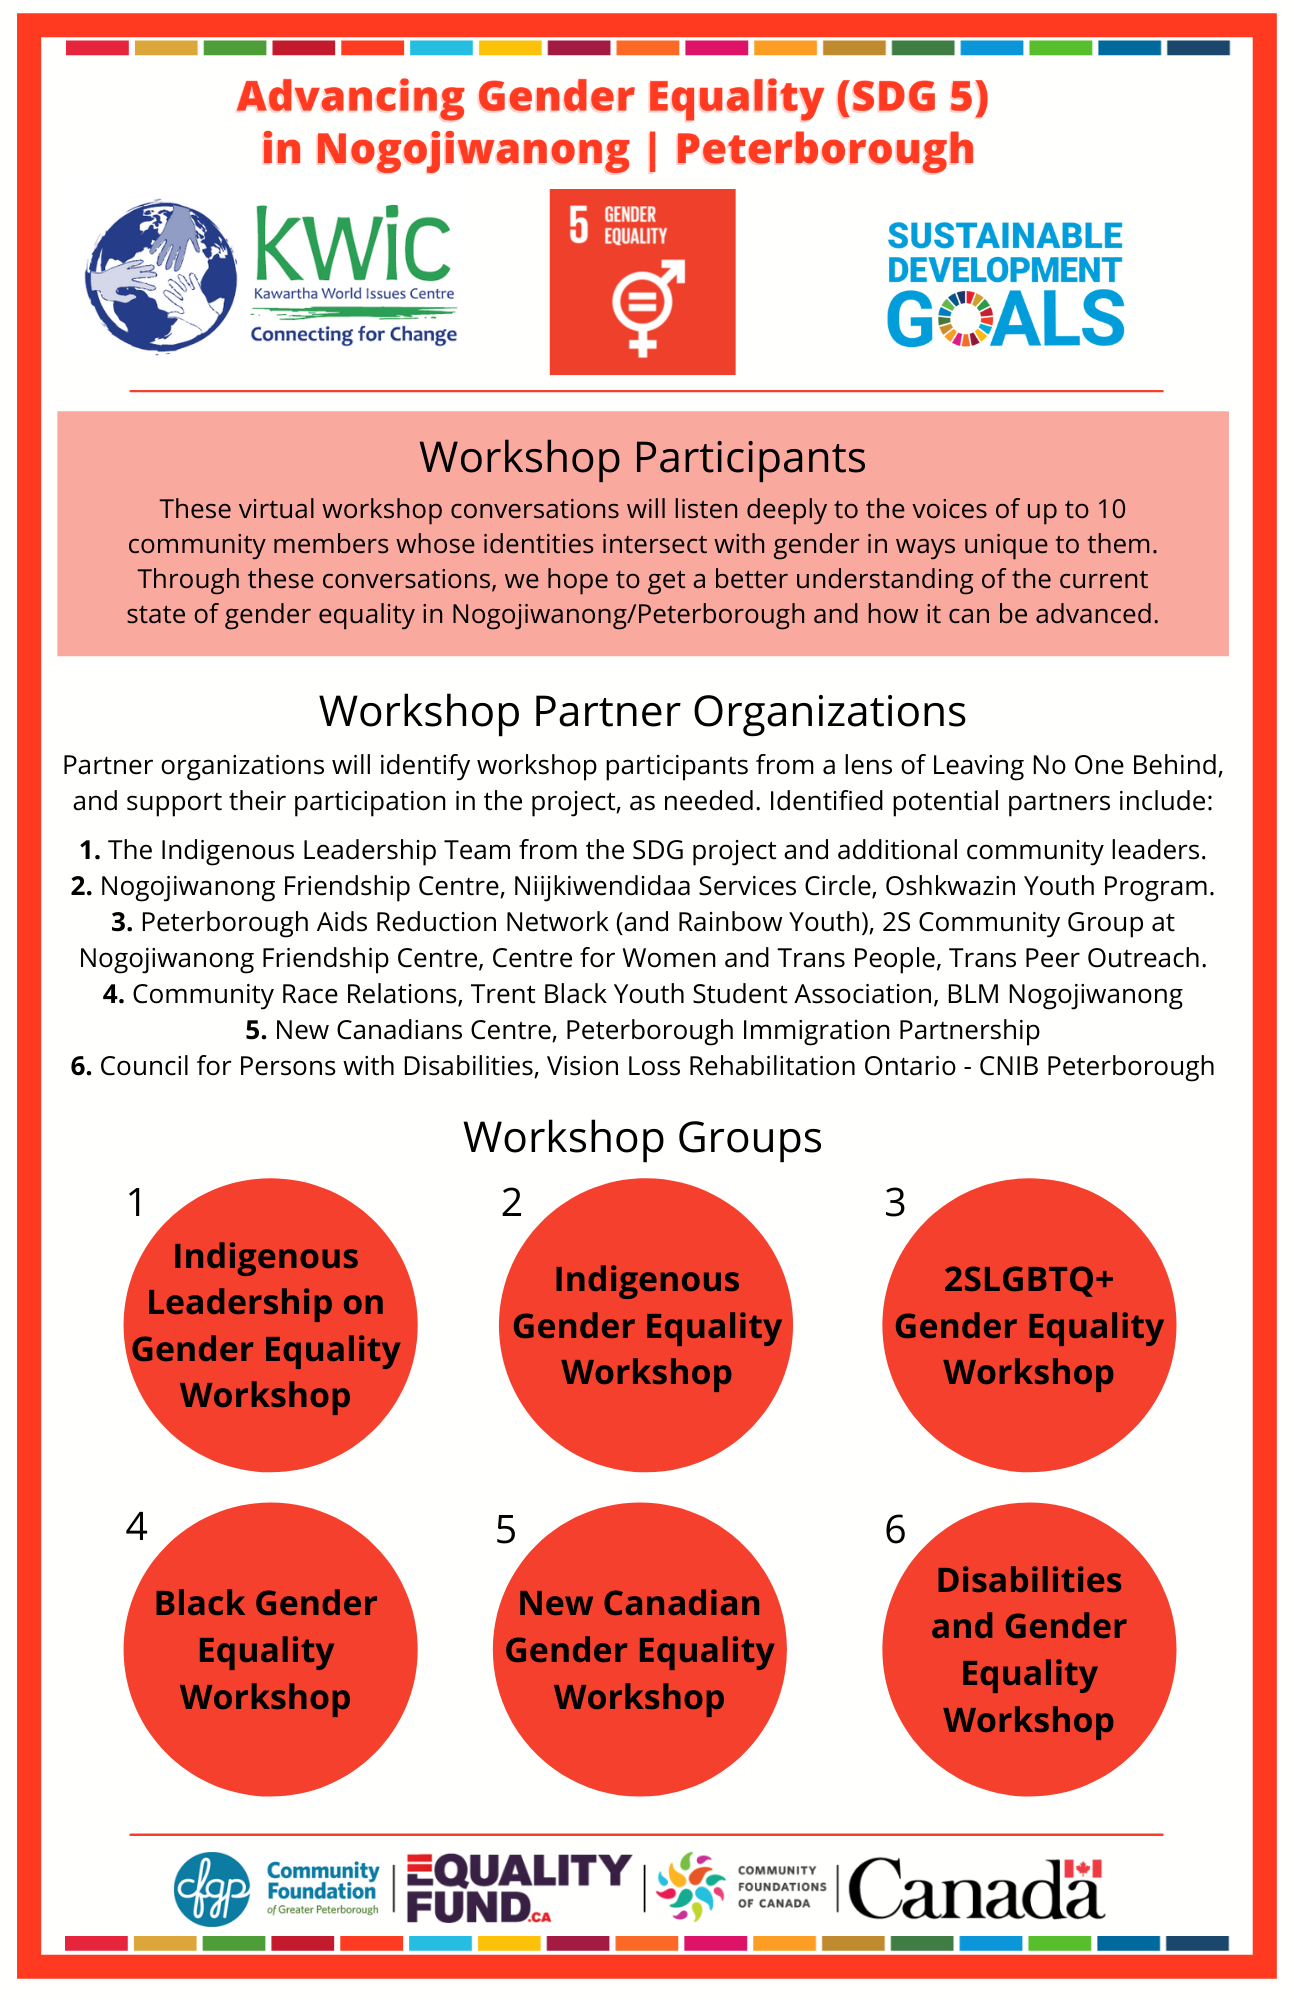 Workshop Participants; Workshop Potential Partner Organizations; Workshop Groups.